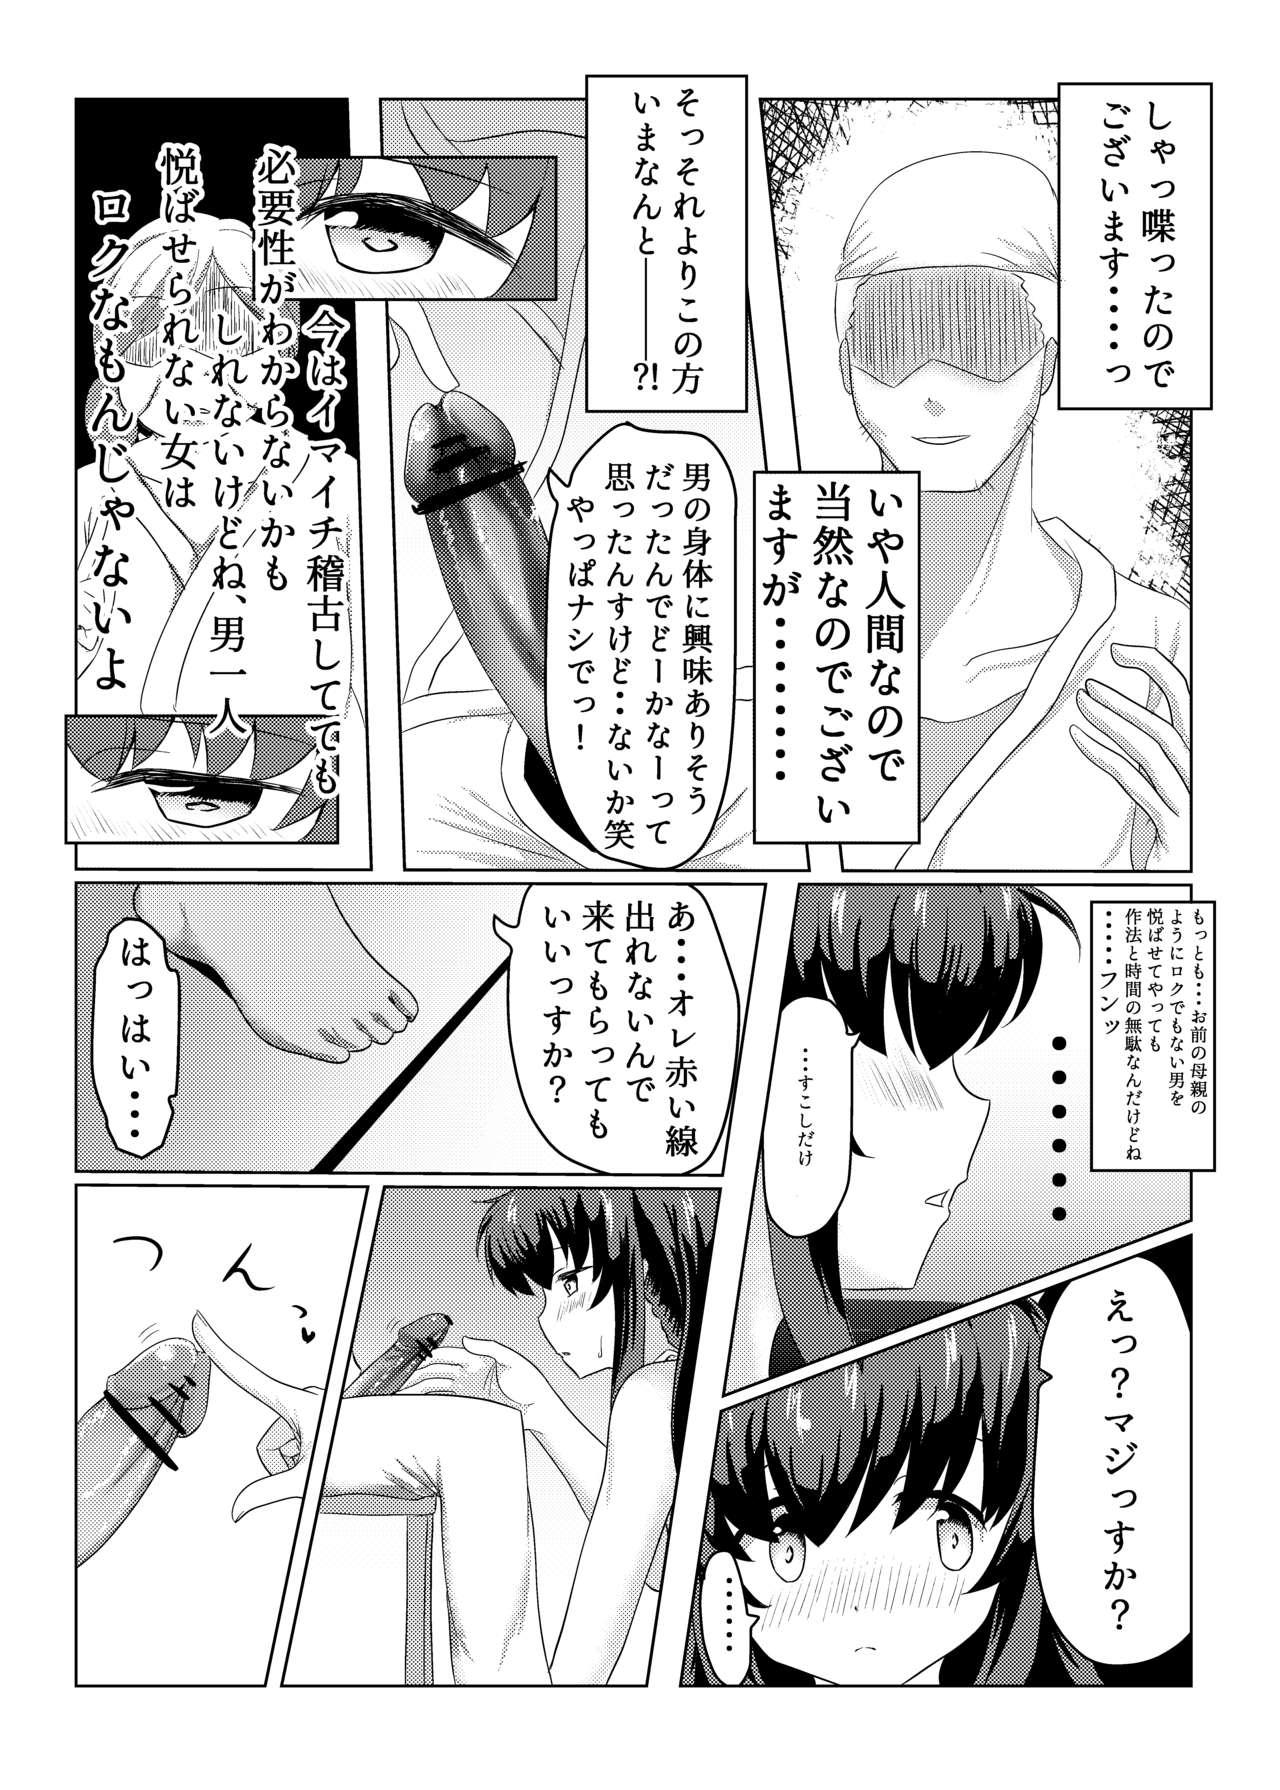 Teamskeet Tsukuyo ga Waruinodegozaimasu - Puella magi madoka magica side story magia record Fat Pussy - Page 9